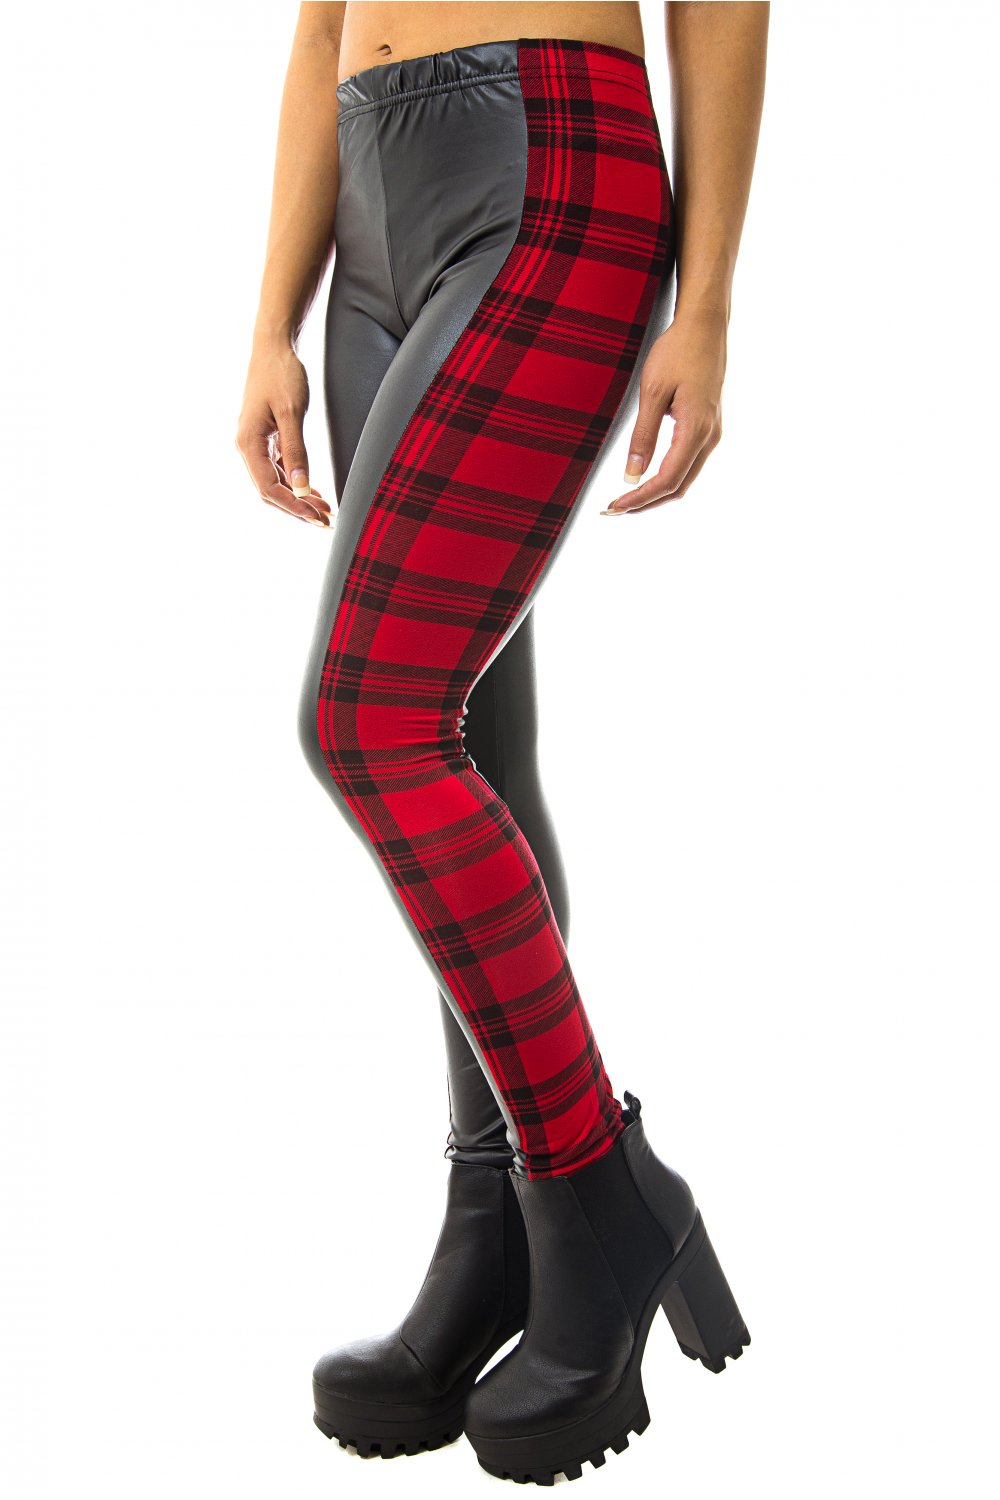 Wet Look Red Tartan Leggings – The Fashion Bible